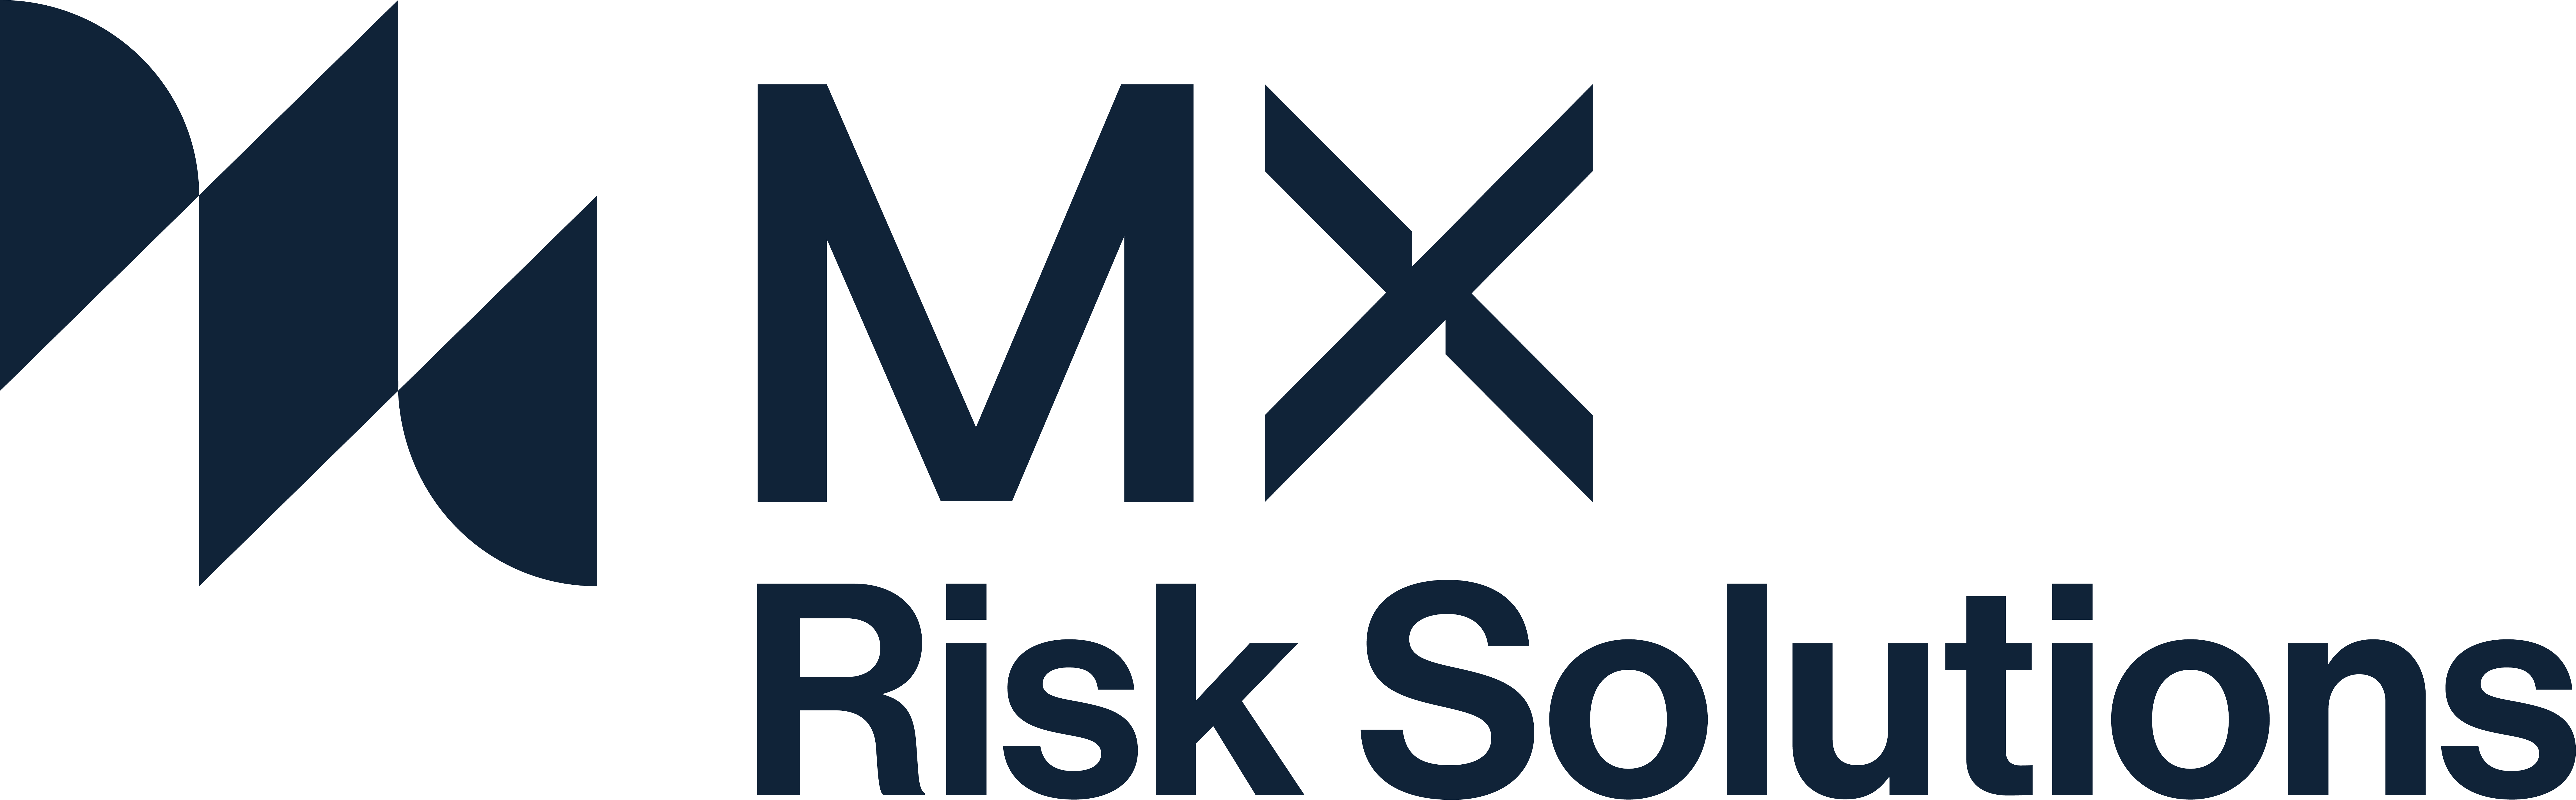 MX RISK SOLUTIONS LOGO CMYK NAVY